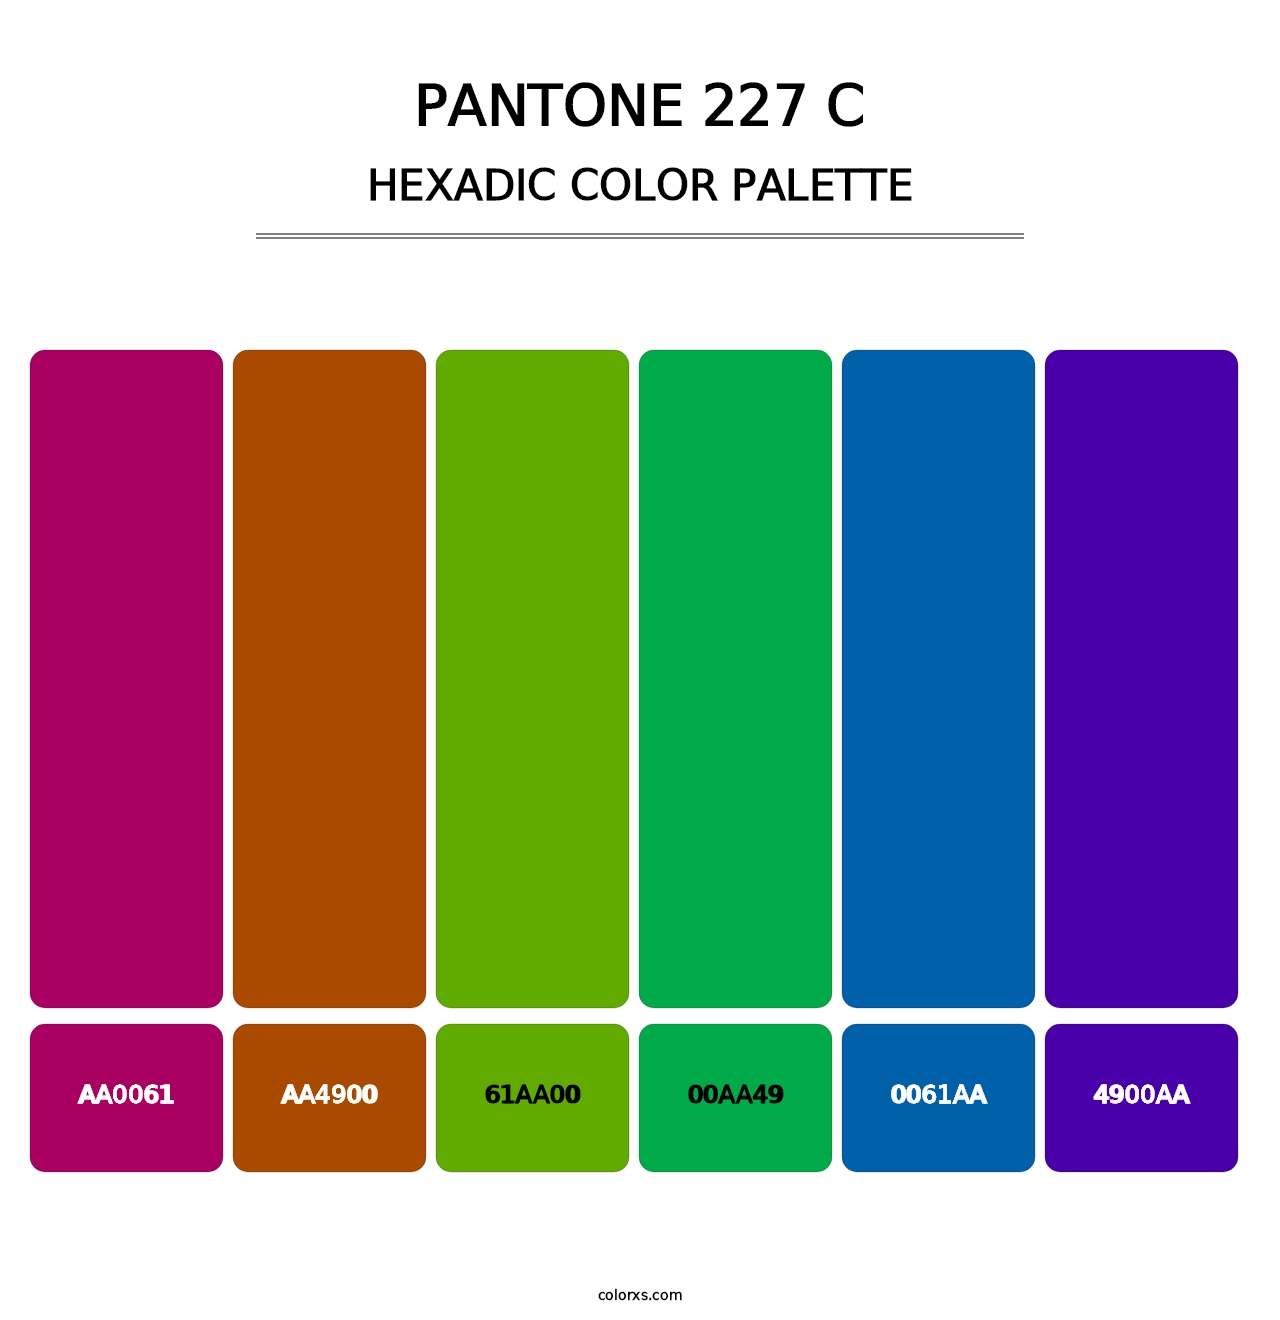 PANTONE 227 C - Hexadic Color Palette